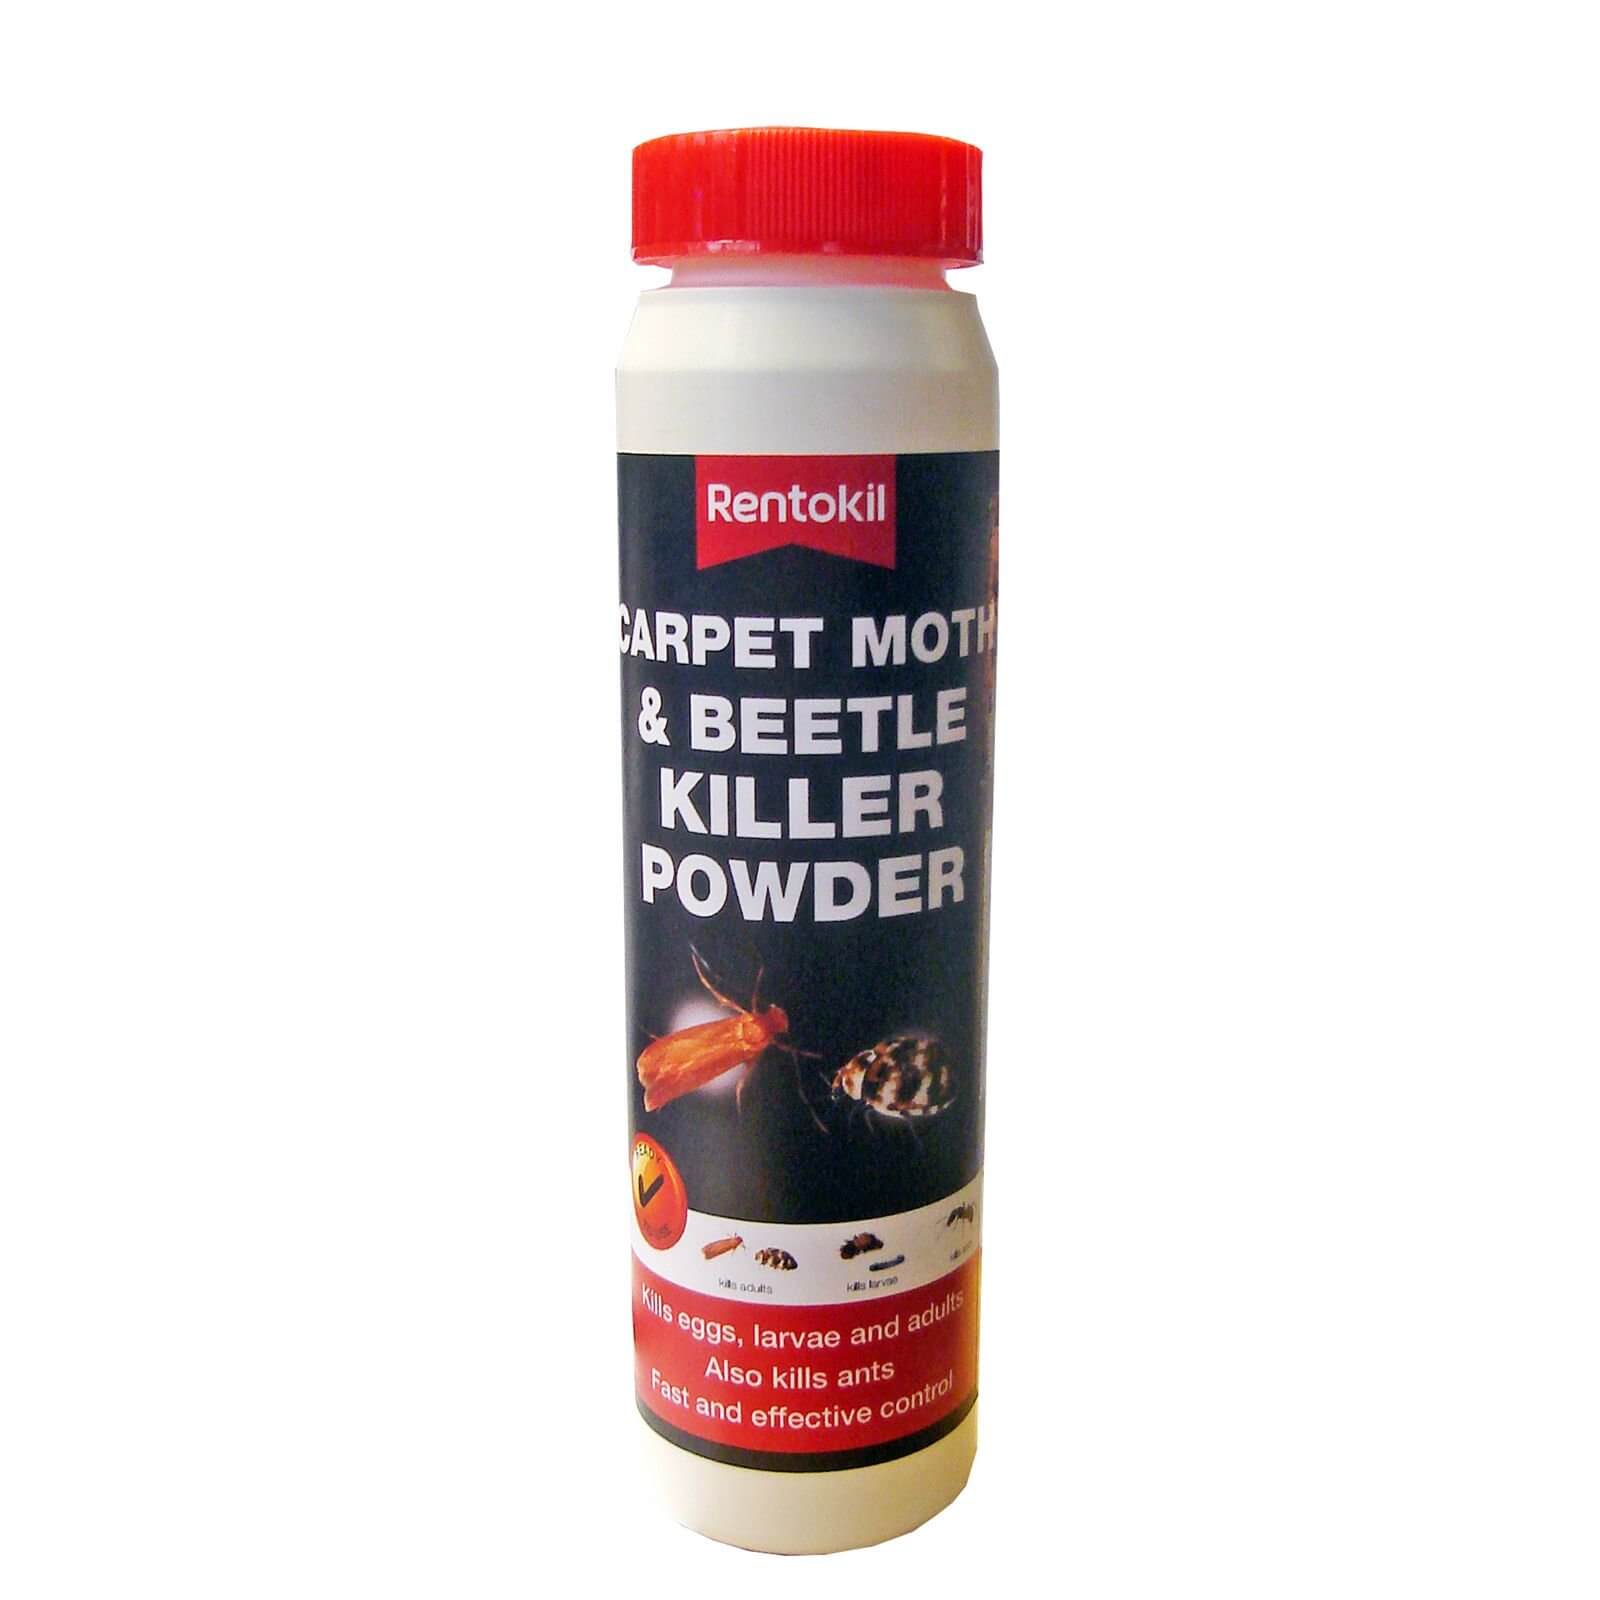 Rentokil Carpet Moth Beetle Killer Powder - 211.6g